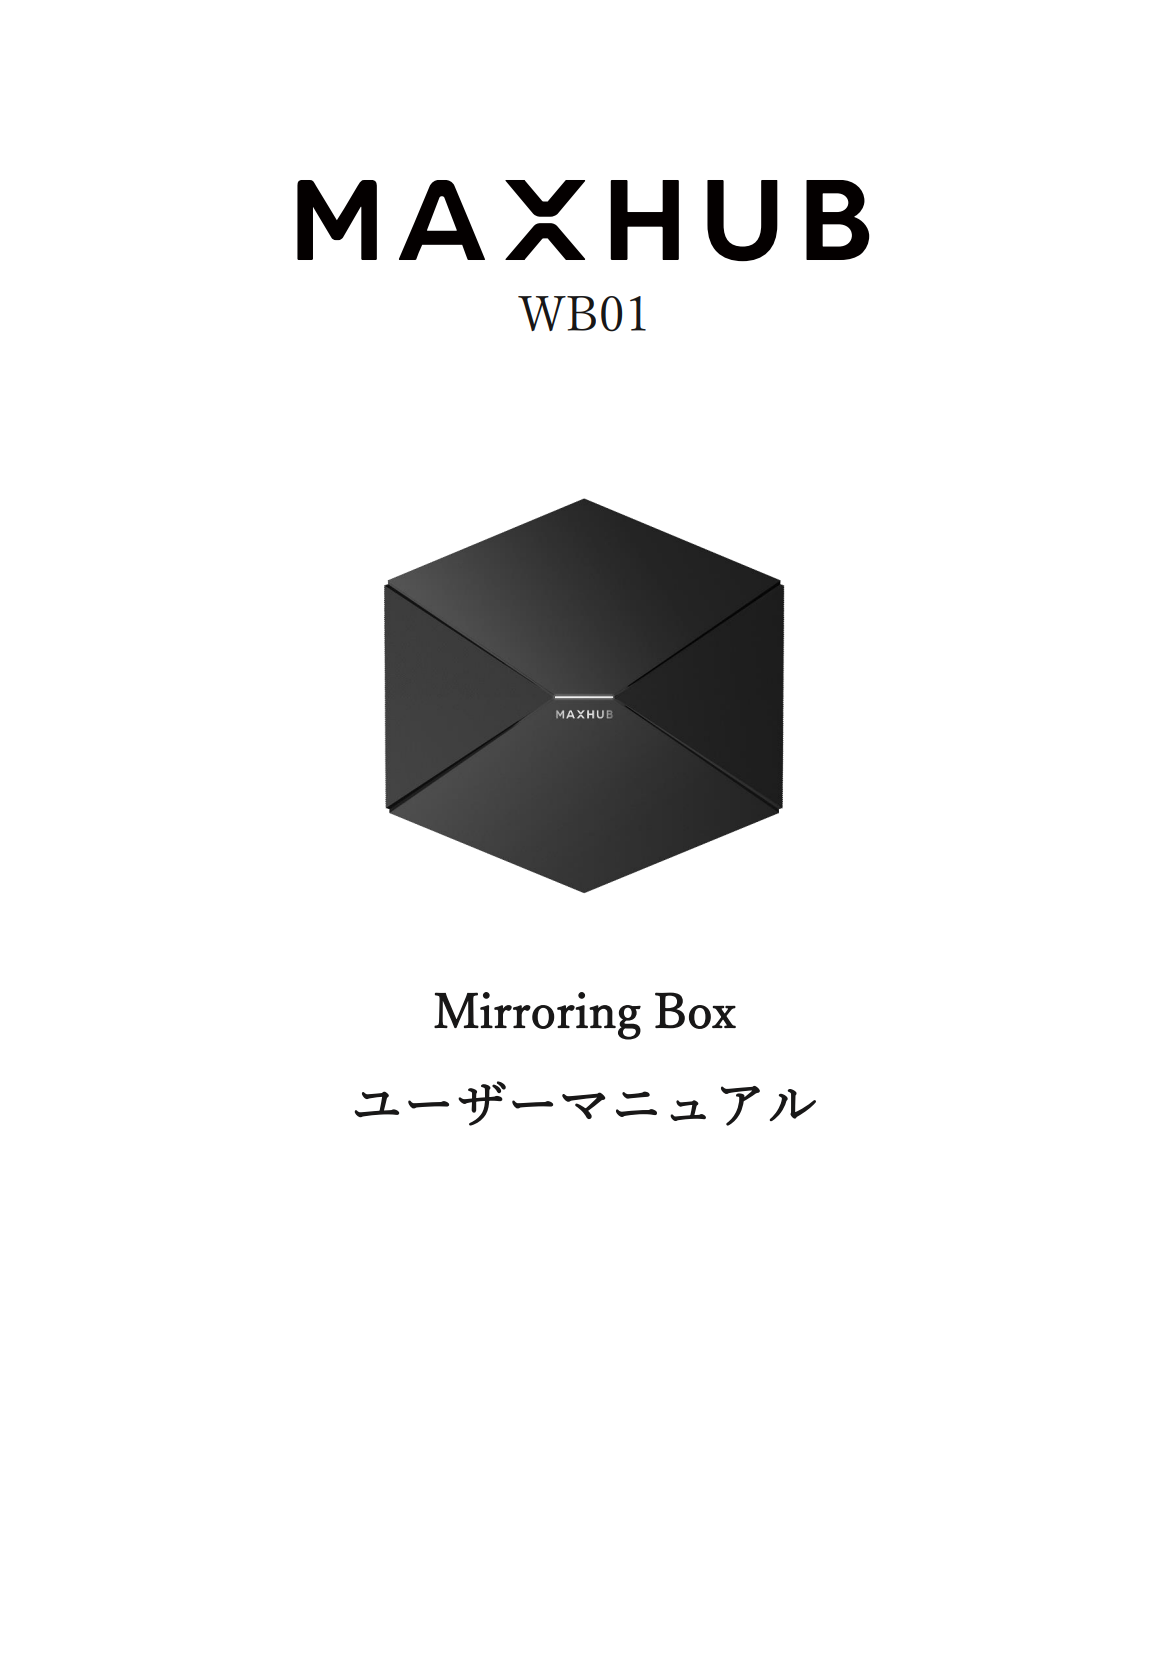 Mirroring Box